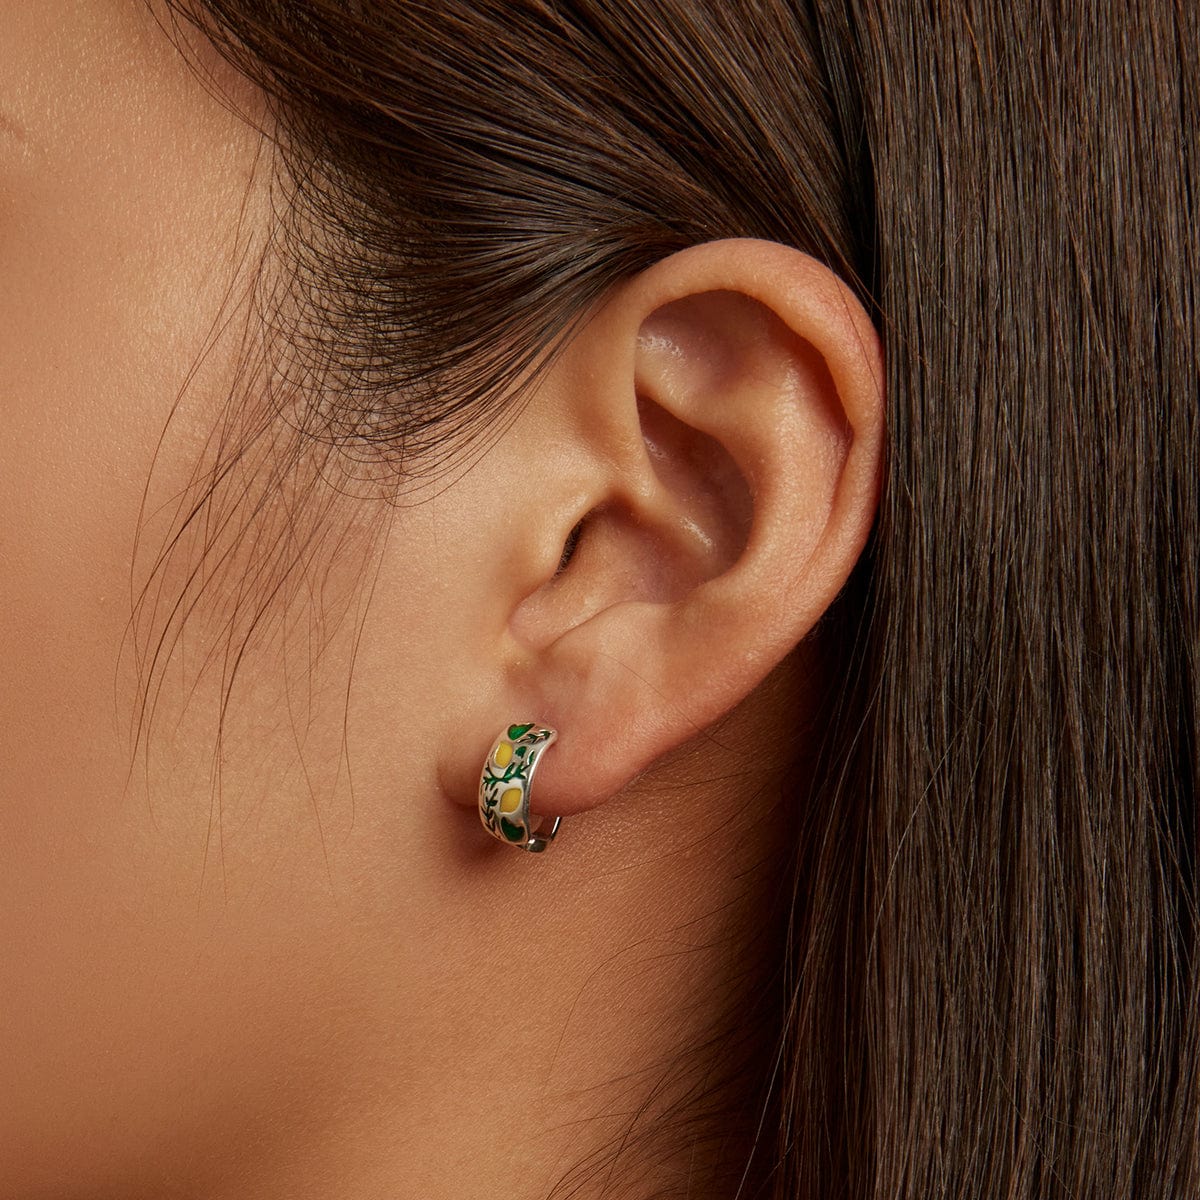 jewelaus Earrings Lemon Leaf Earrings